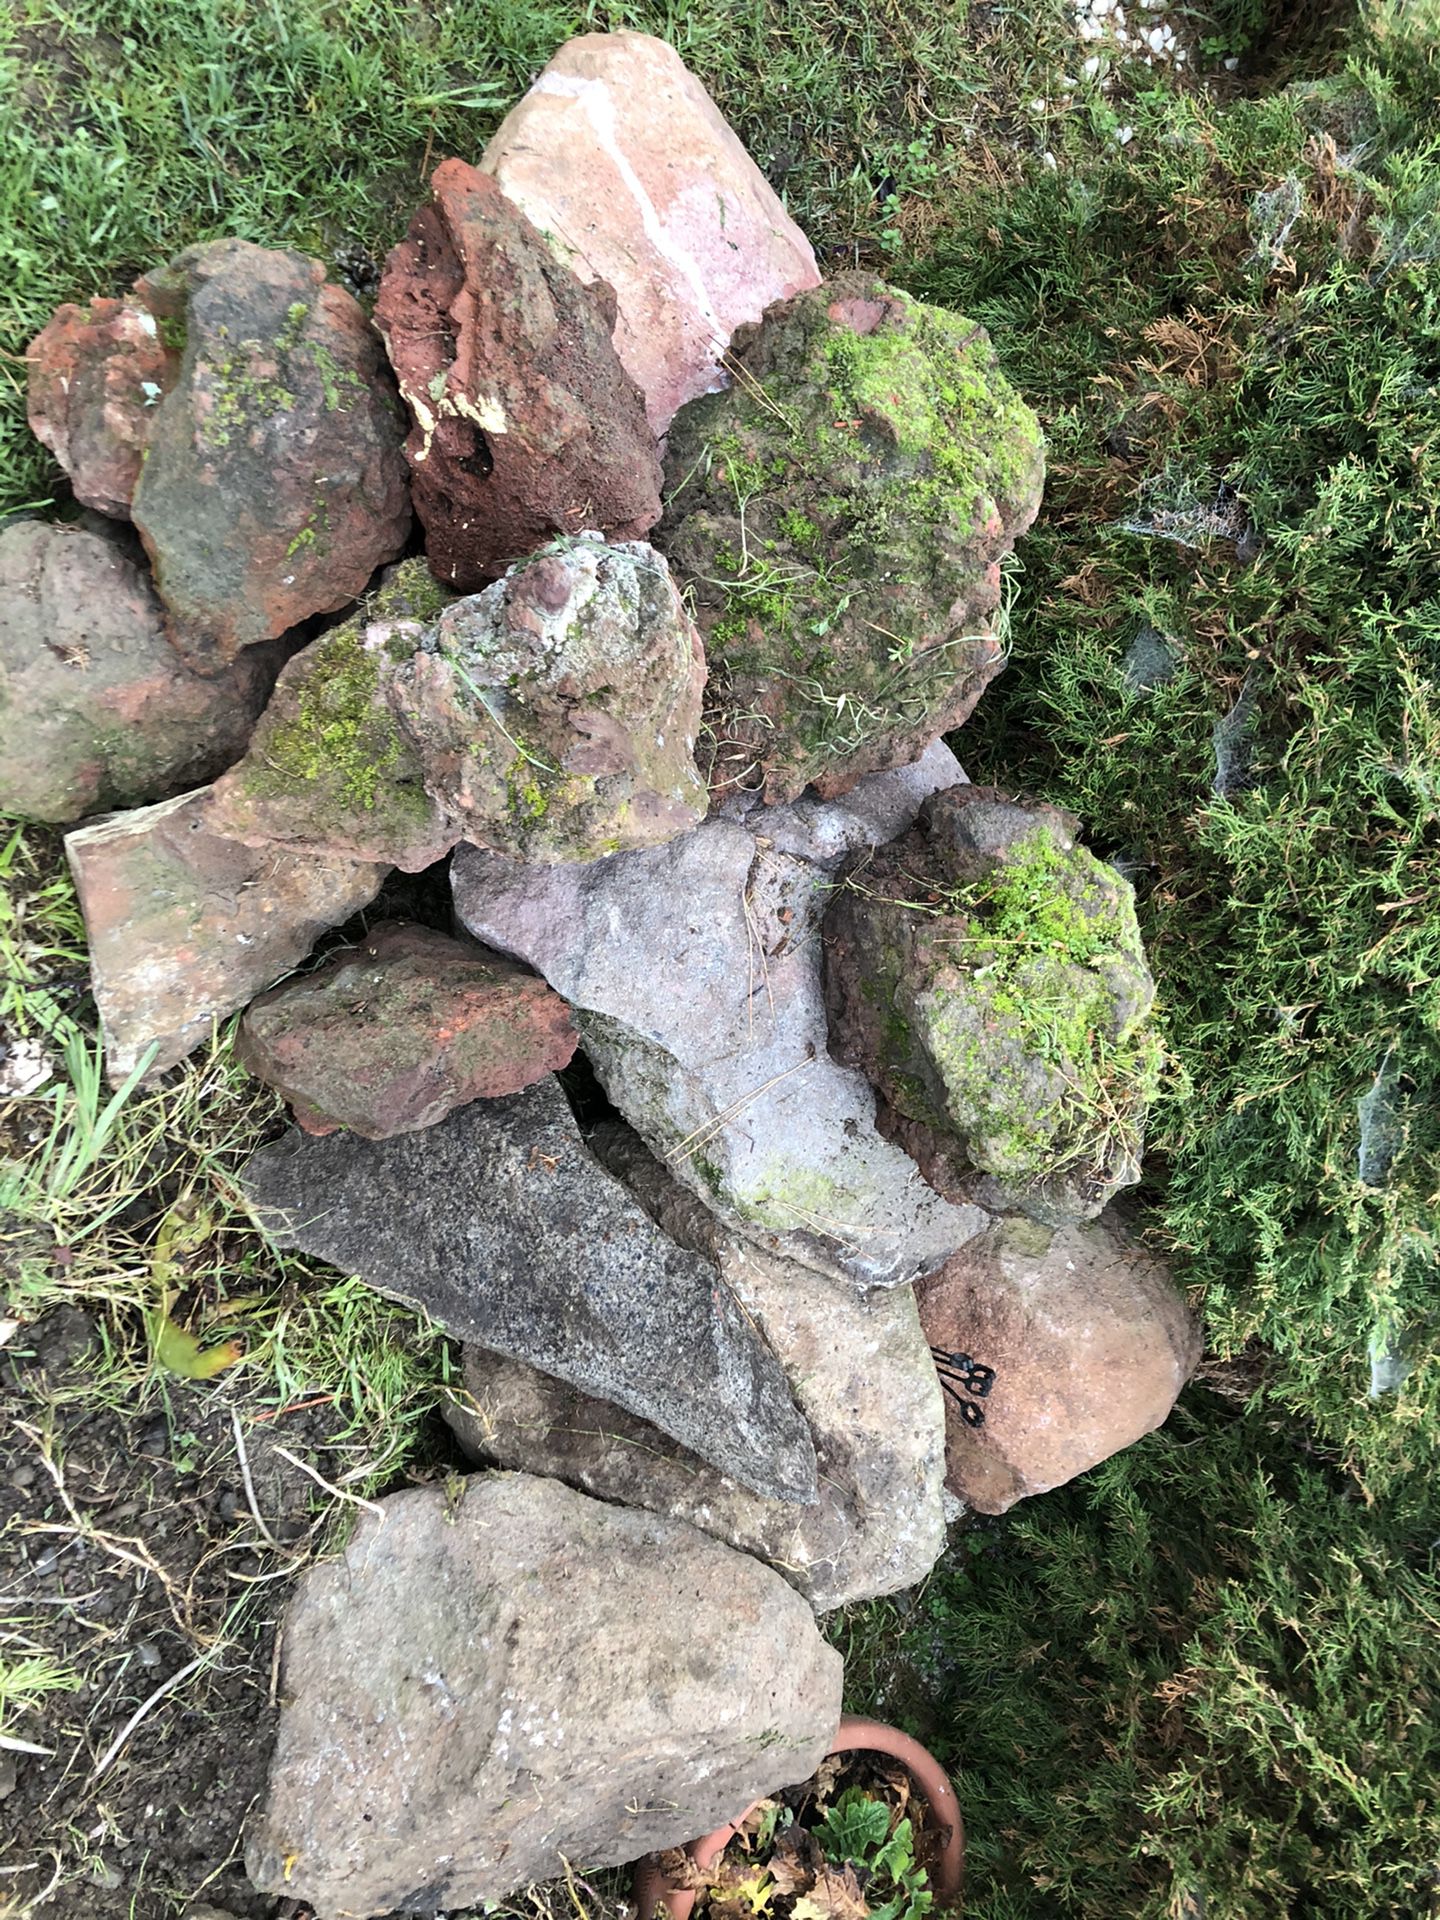 Garden rocks